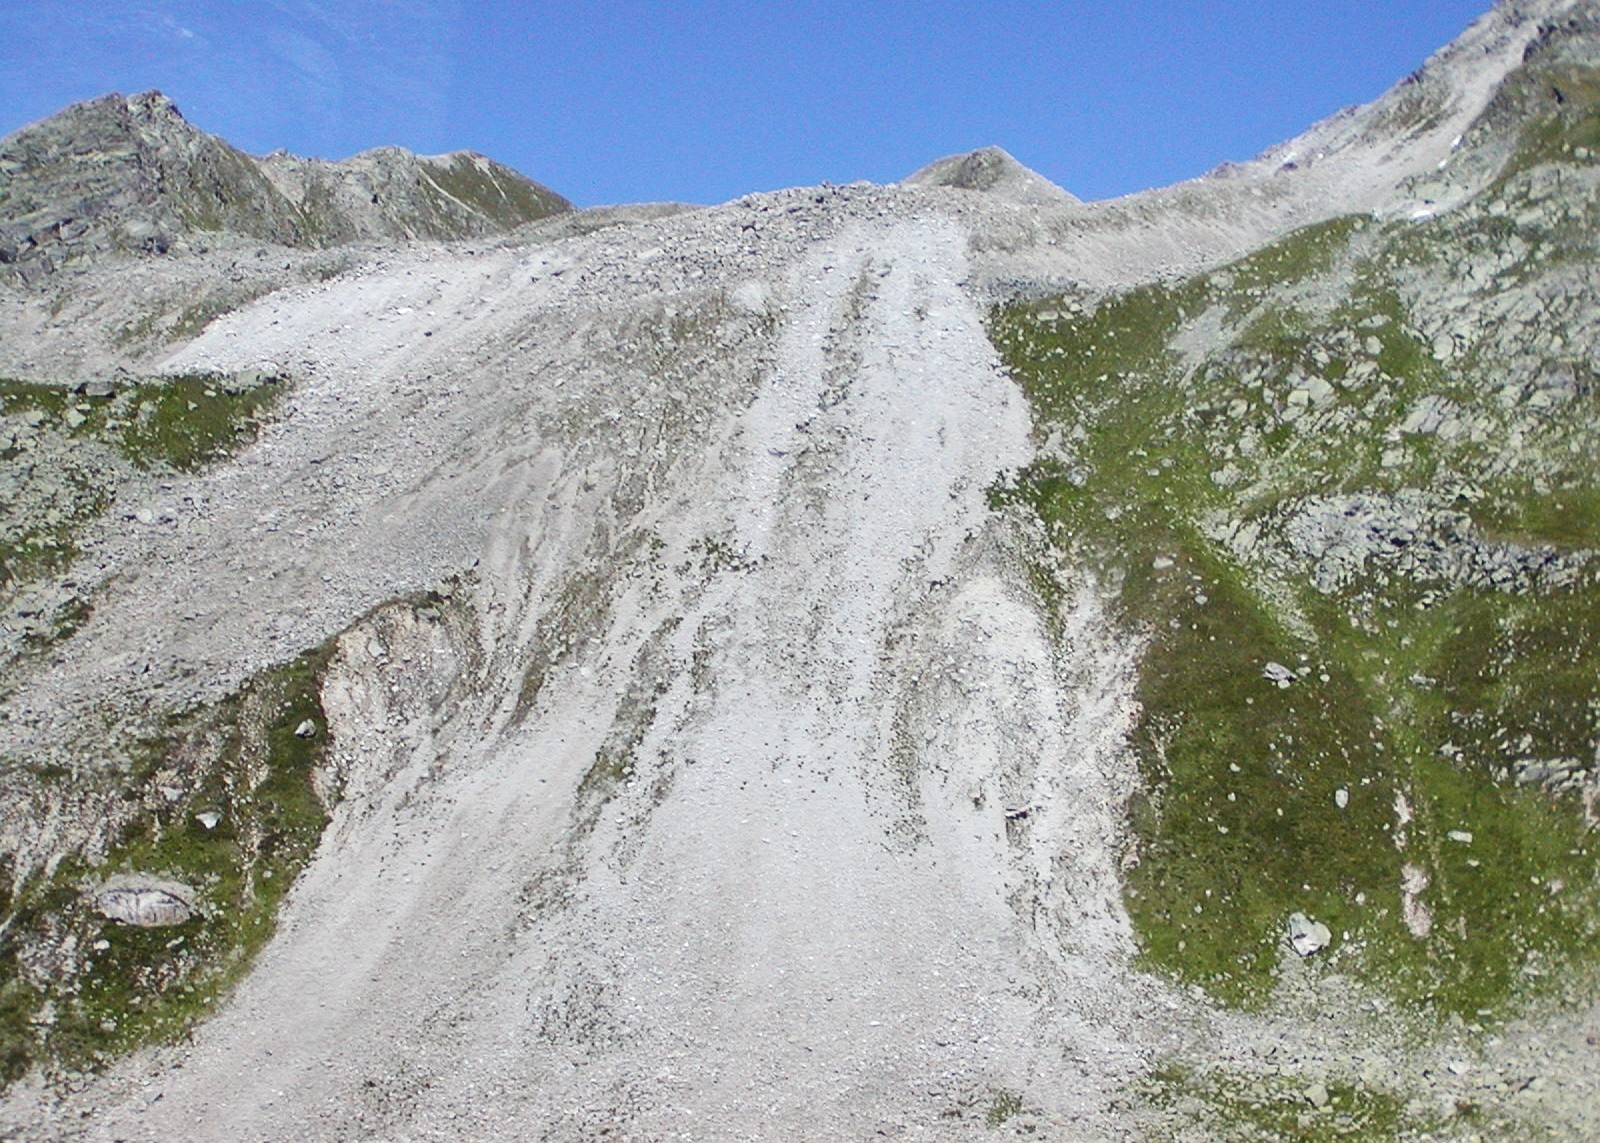 Flueelapass  |  Debris flow from rock glacier